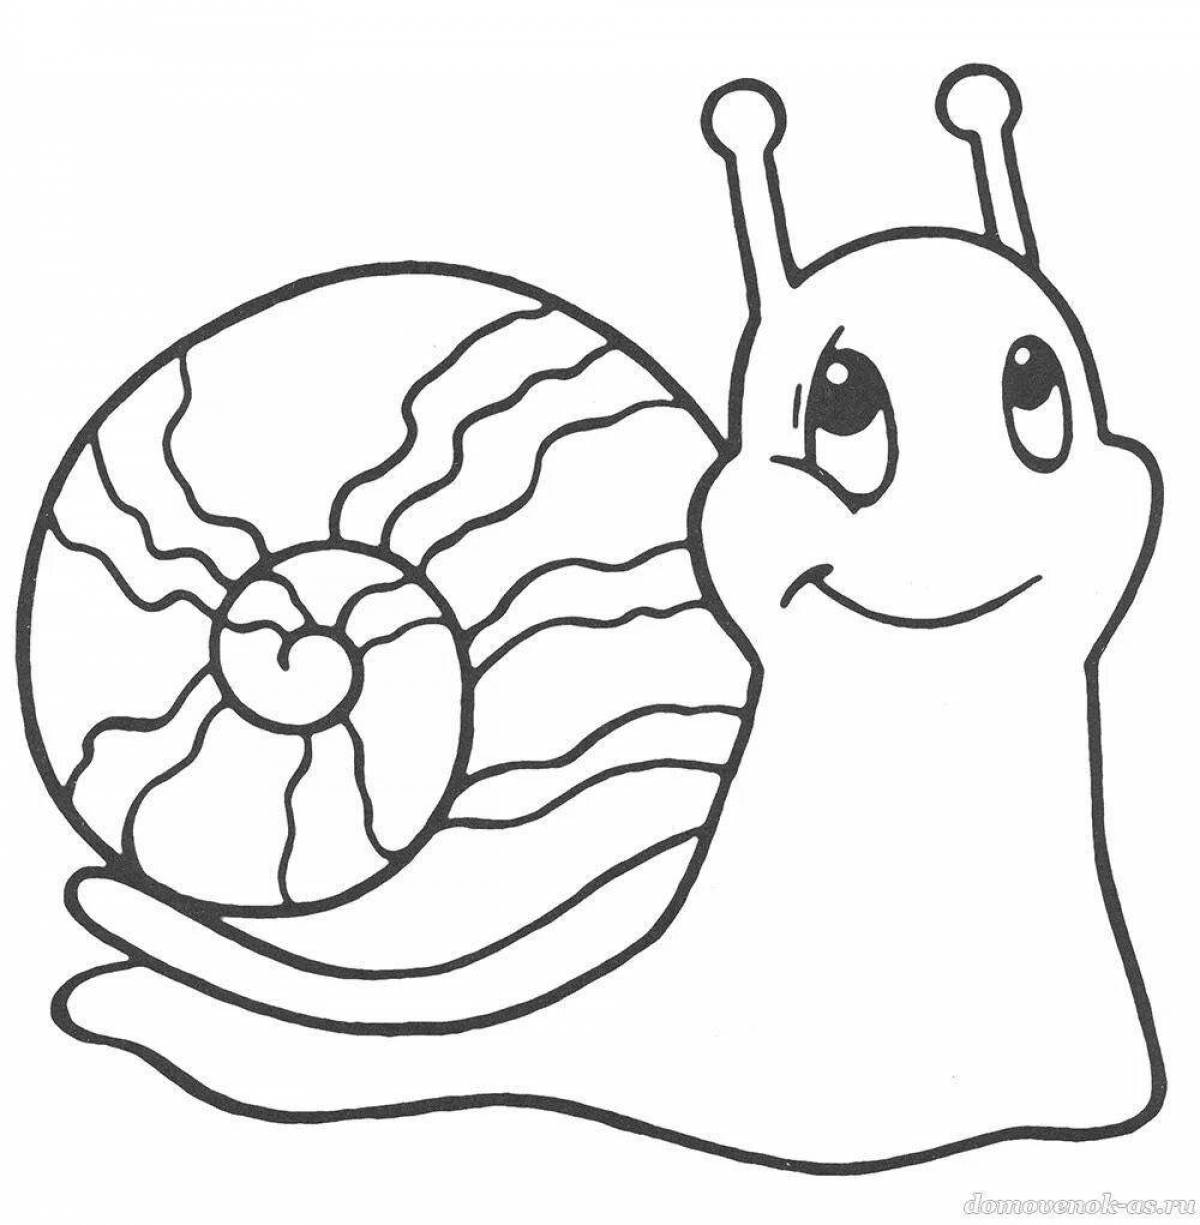 Color fantasy snail drawing for children